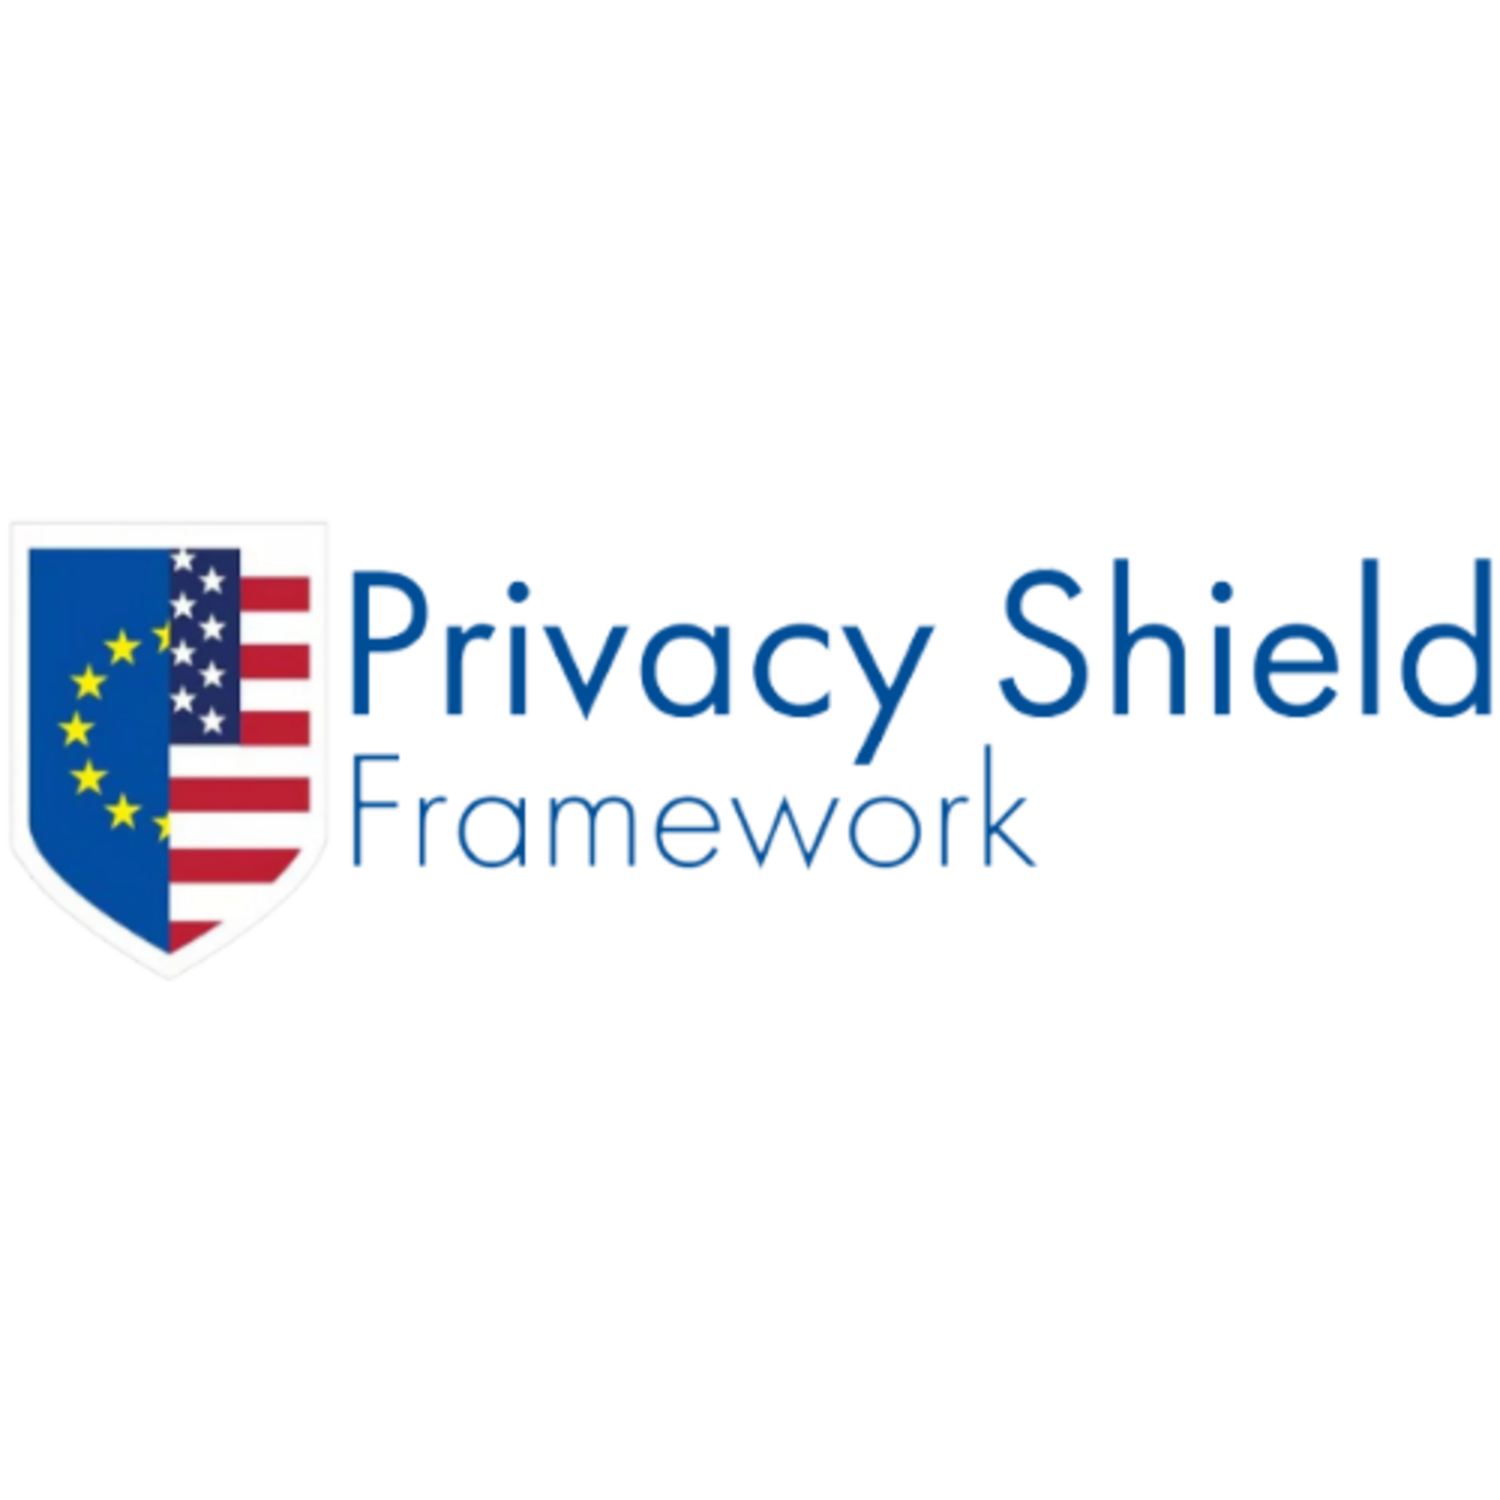 Eu u. Privacy Shield. Eu privacy. Privacy us. Eu как u.